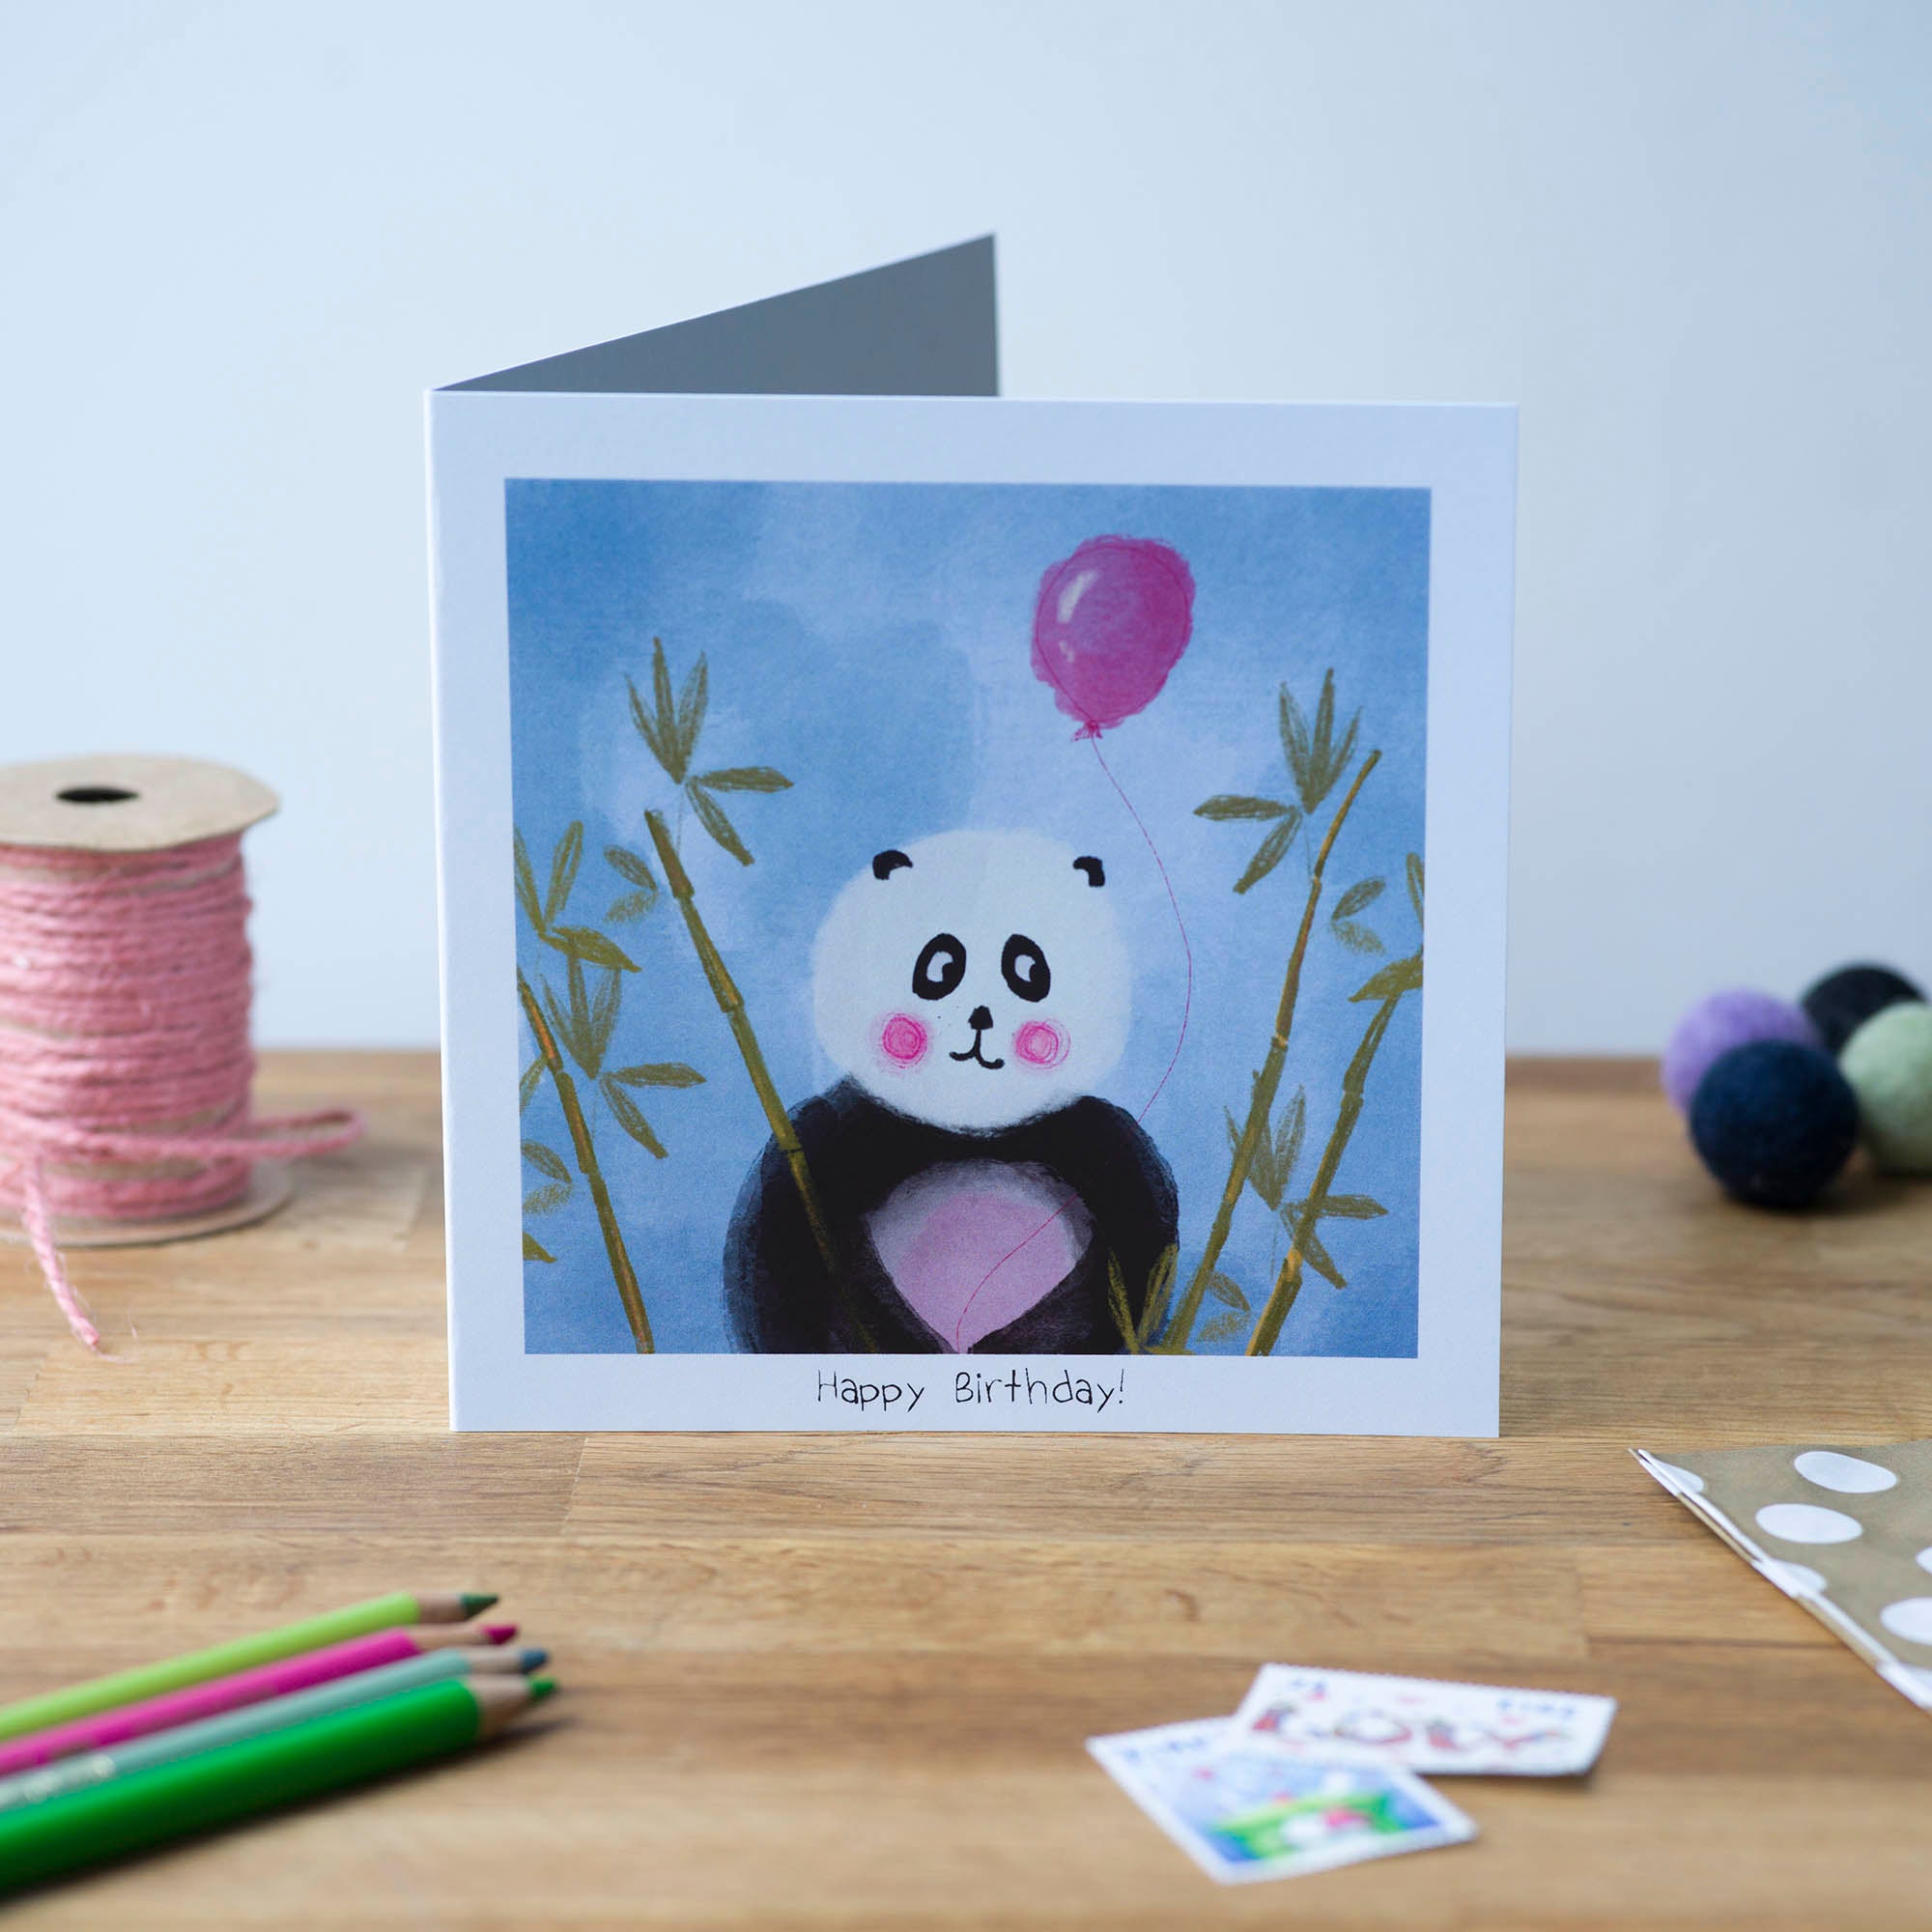 Pear Shaped Studio "Happy Birthday" Greeting Card